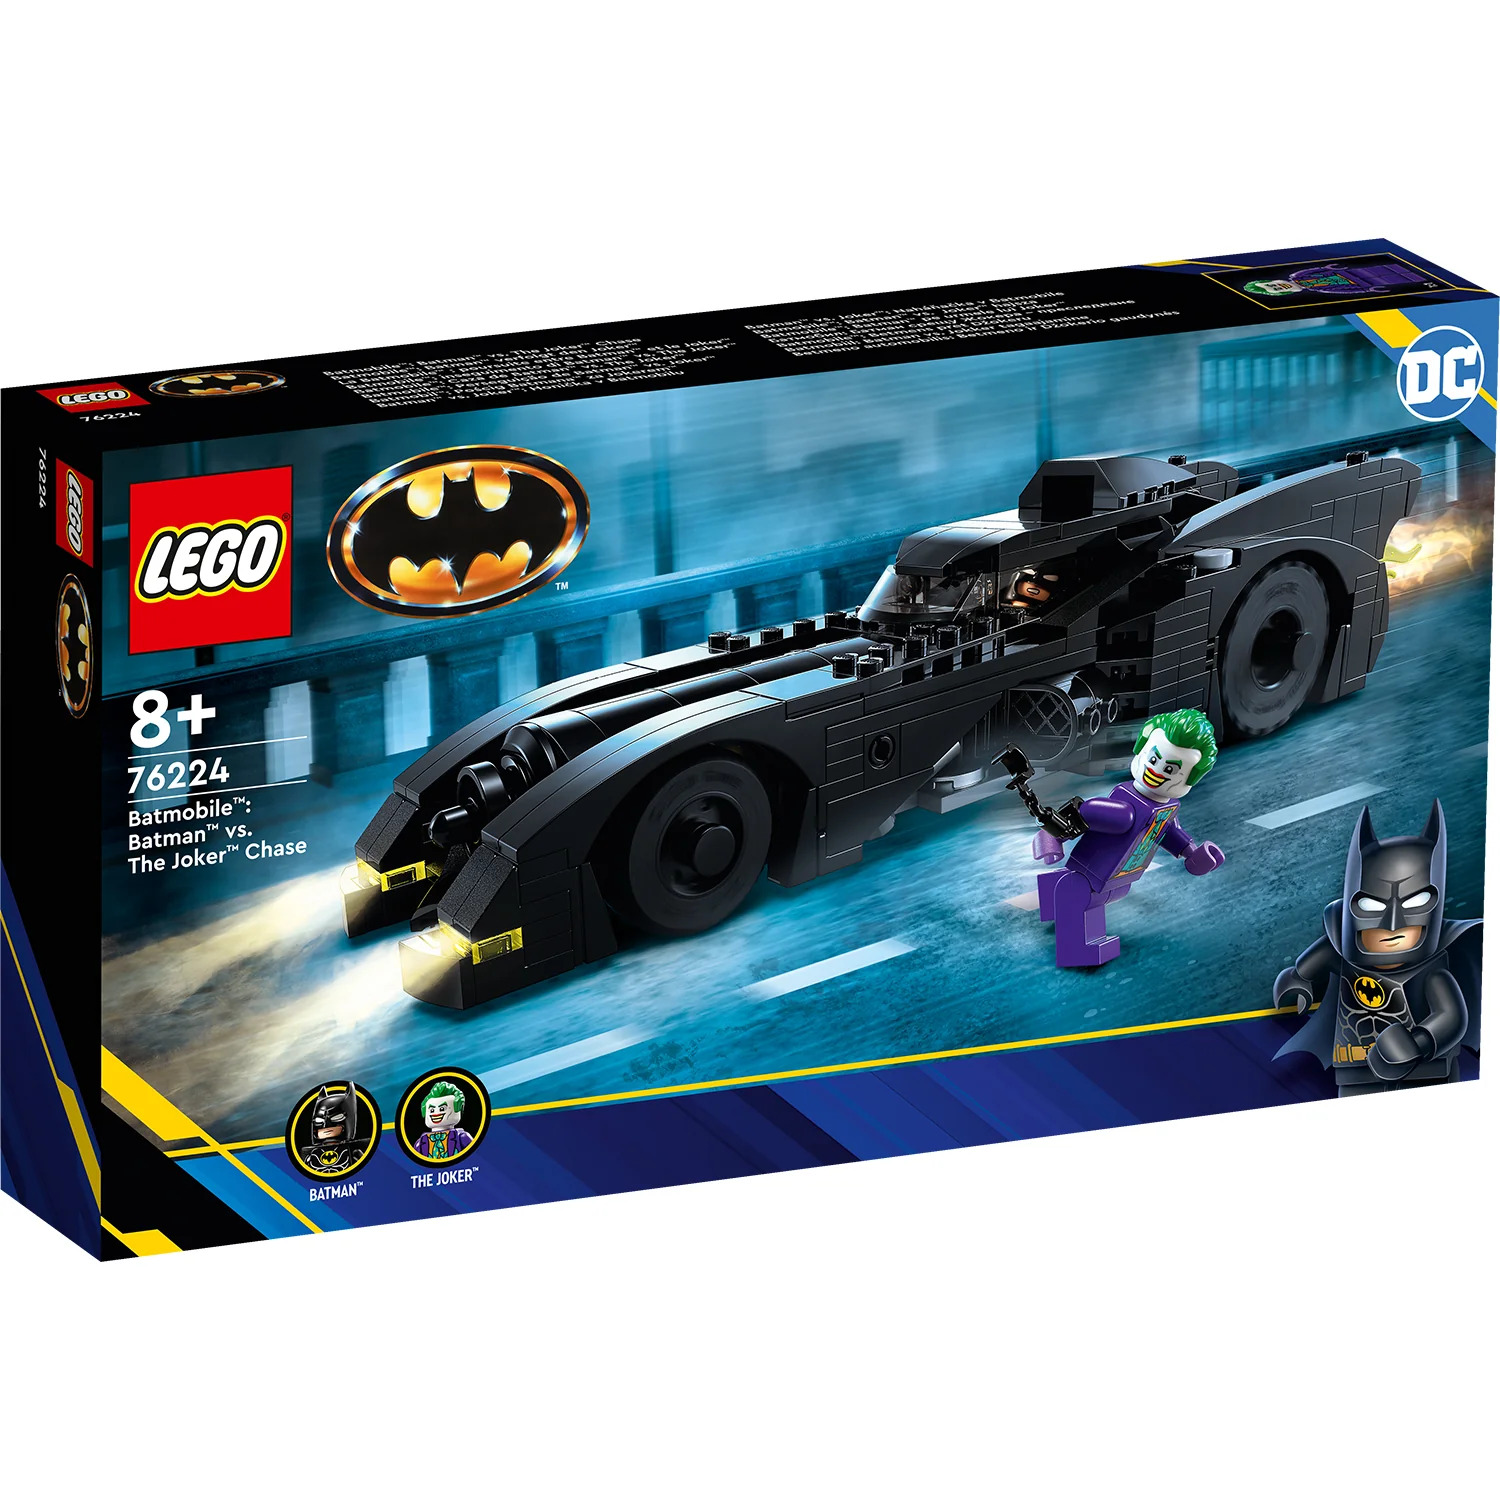 LEGO DC Batmobile: Batman vs. The Joker Chase (76224) Revealed - The Brick